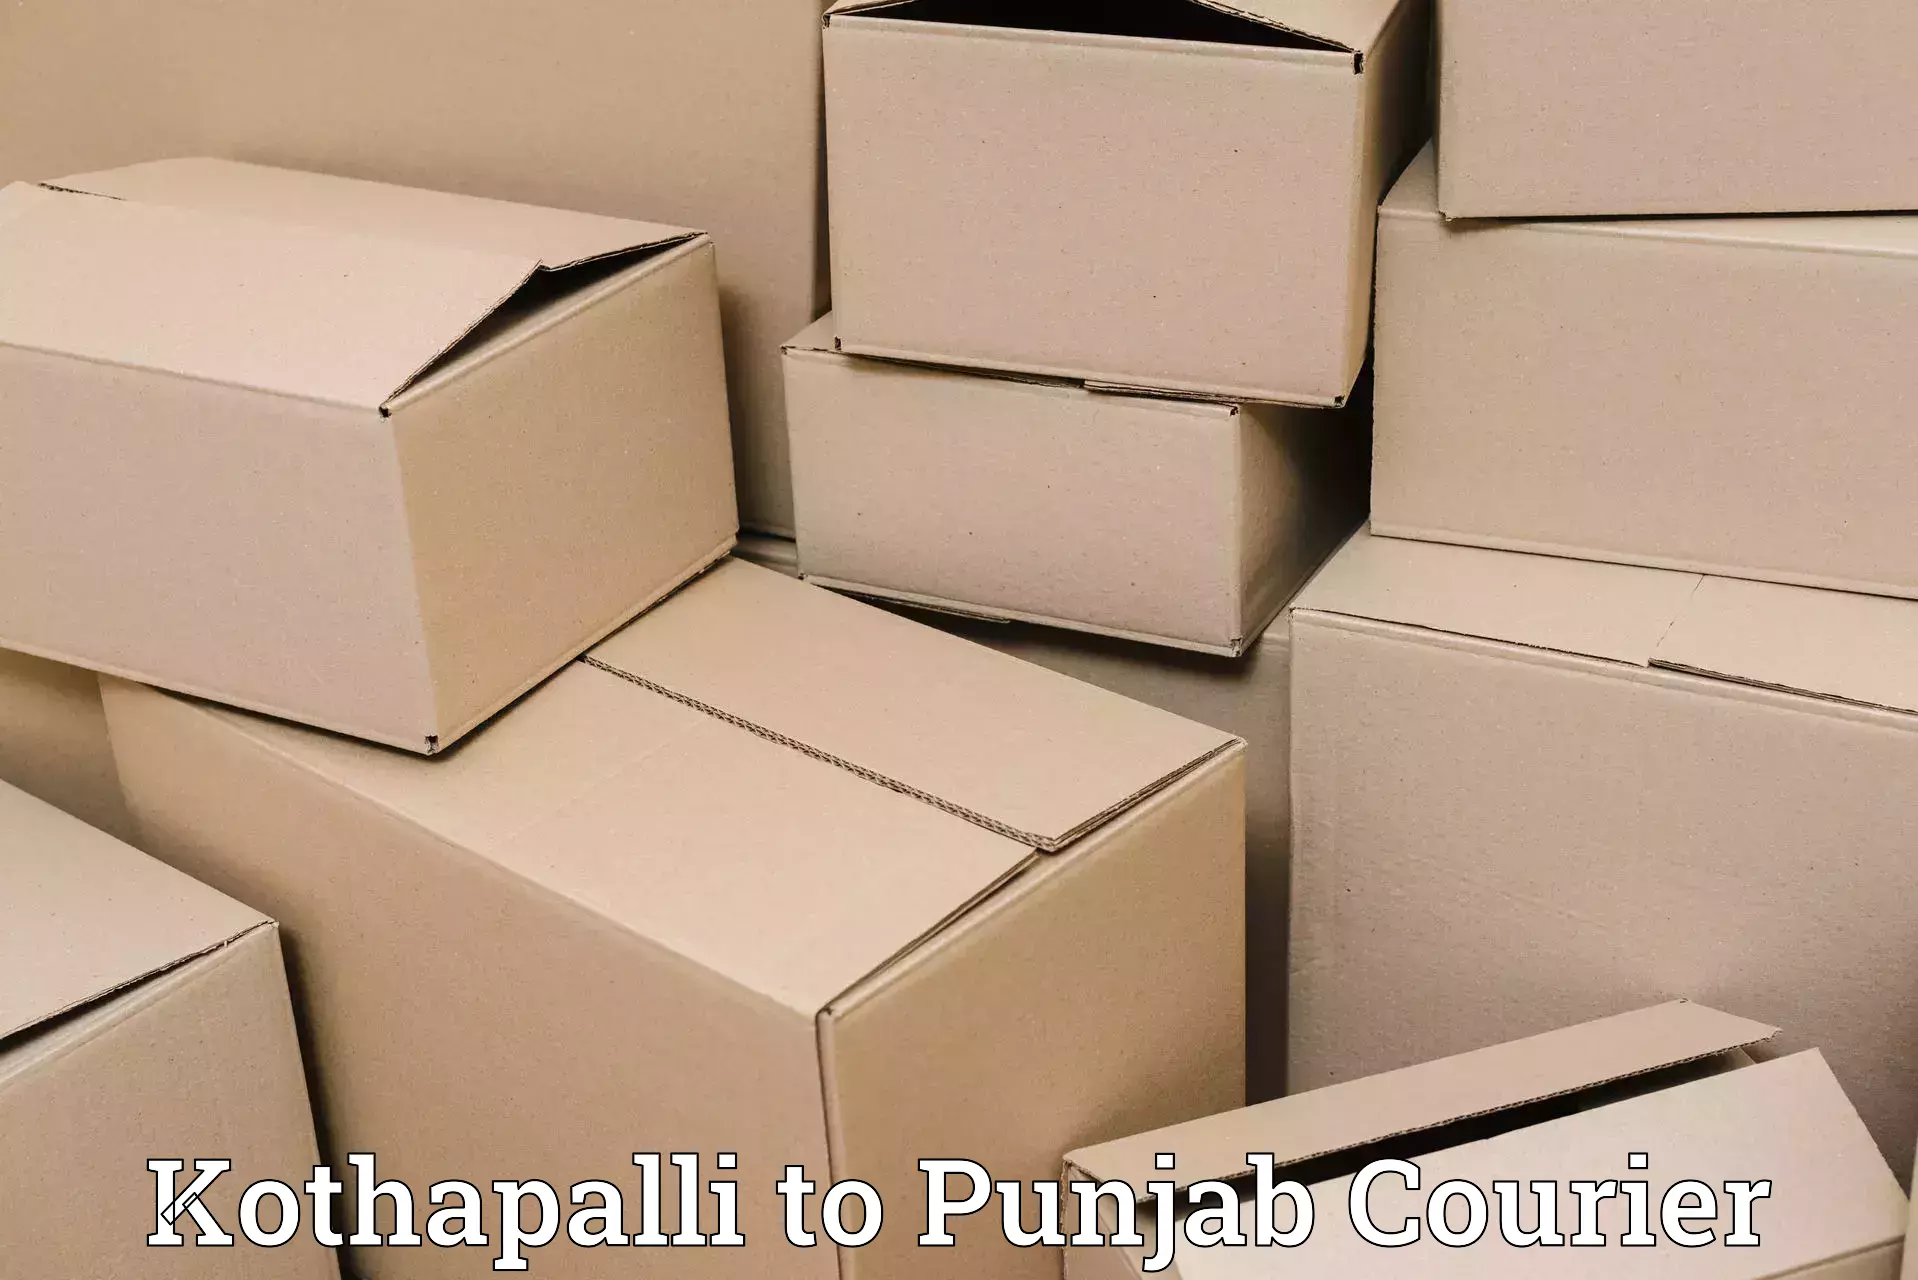 Digital courier platforms Kothapalli to Amritsar